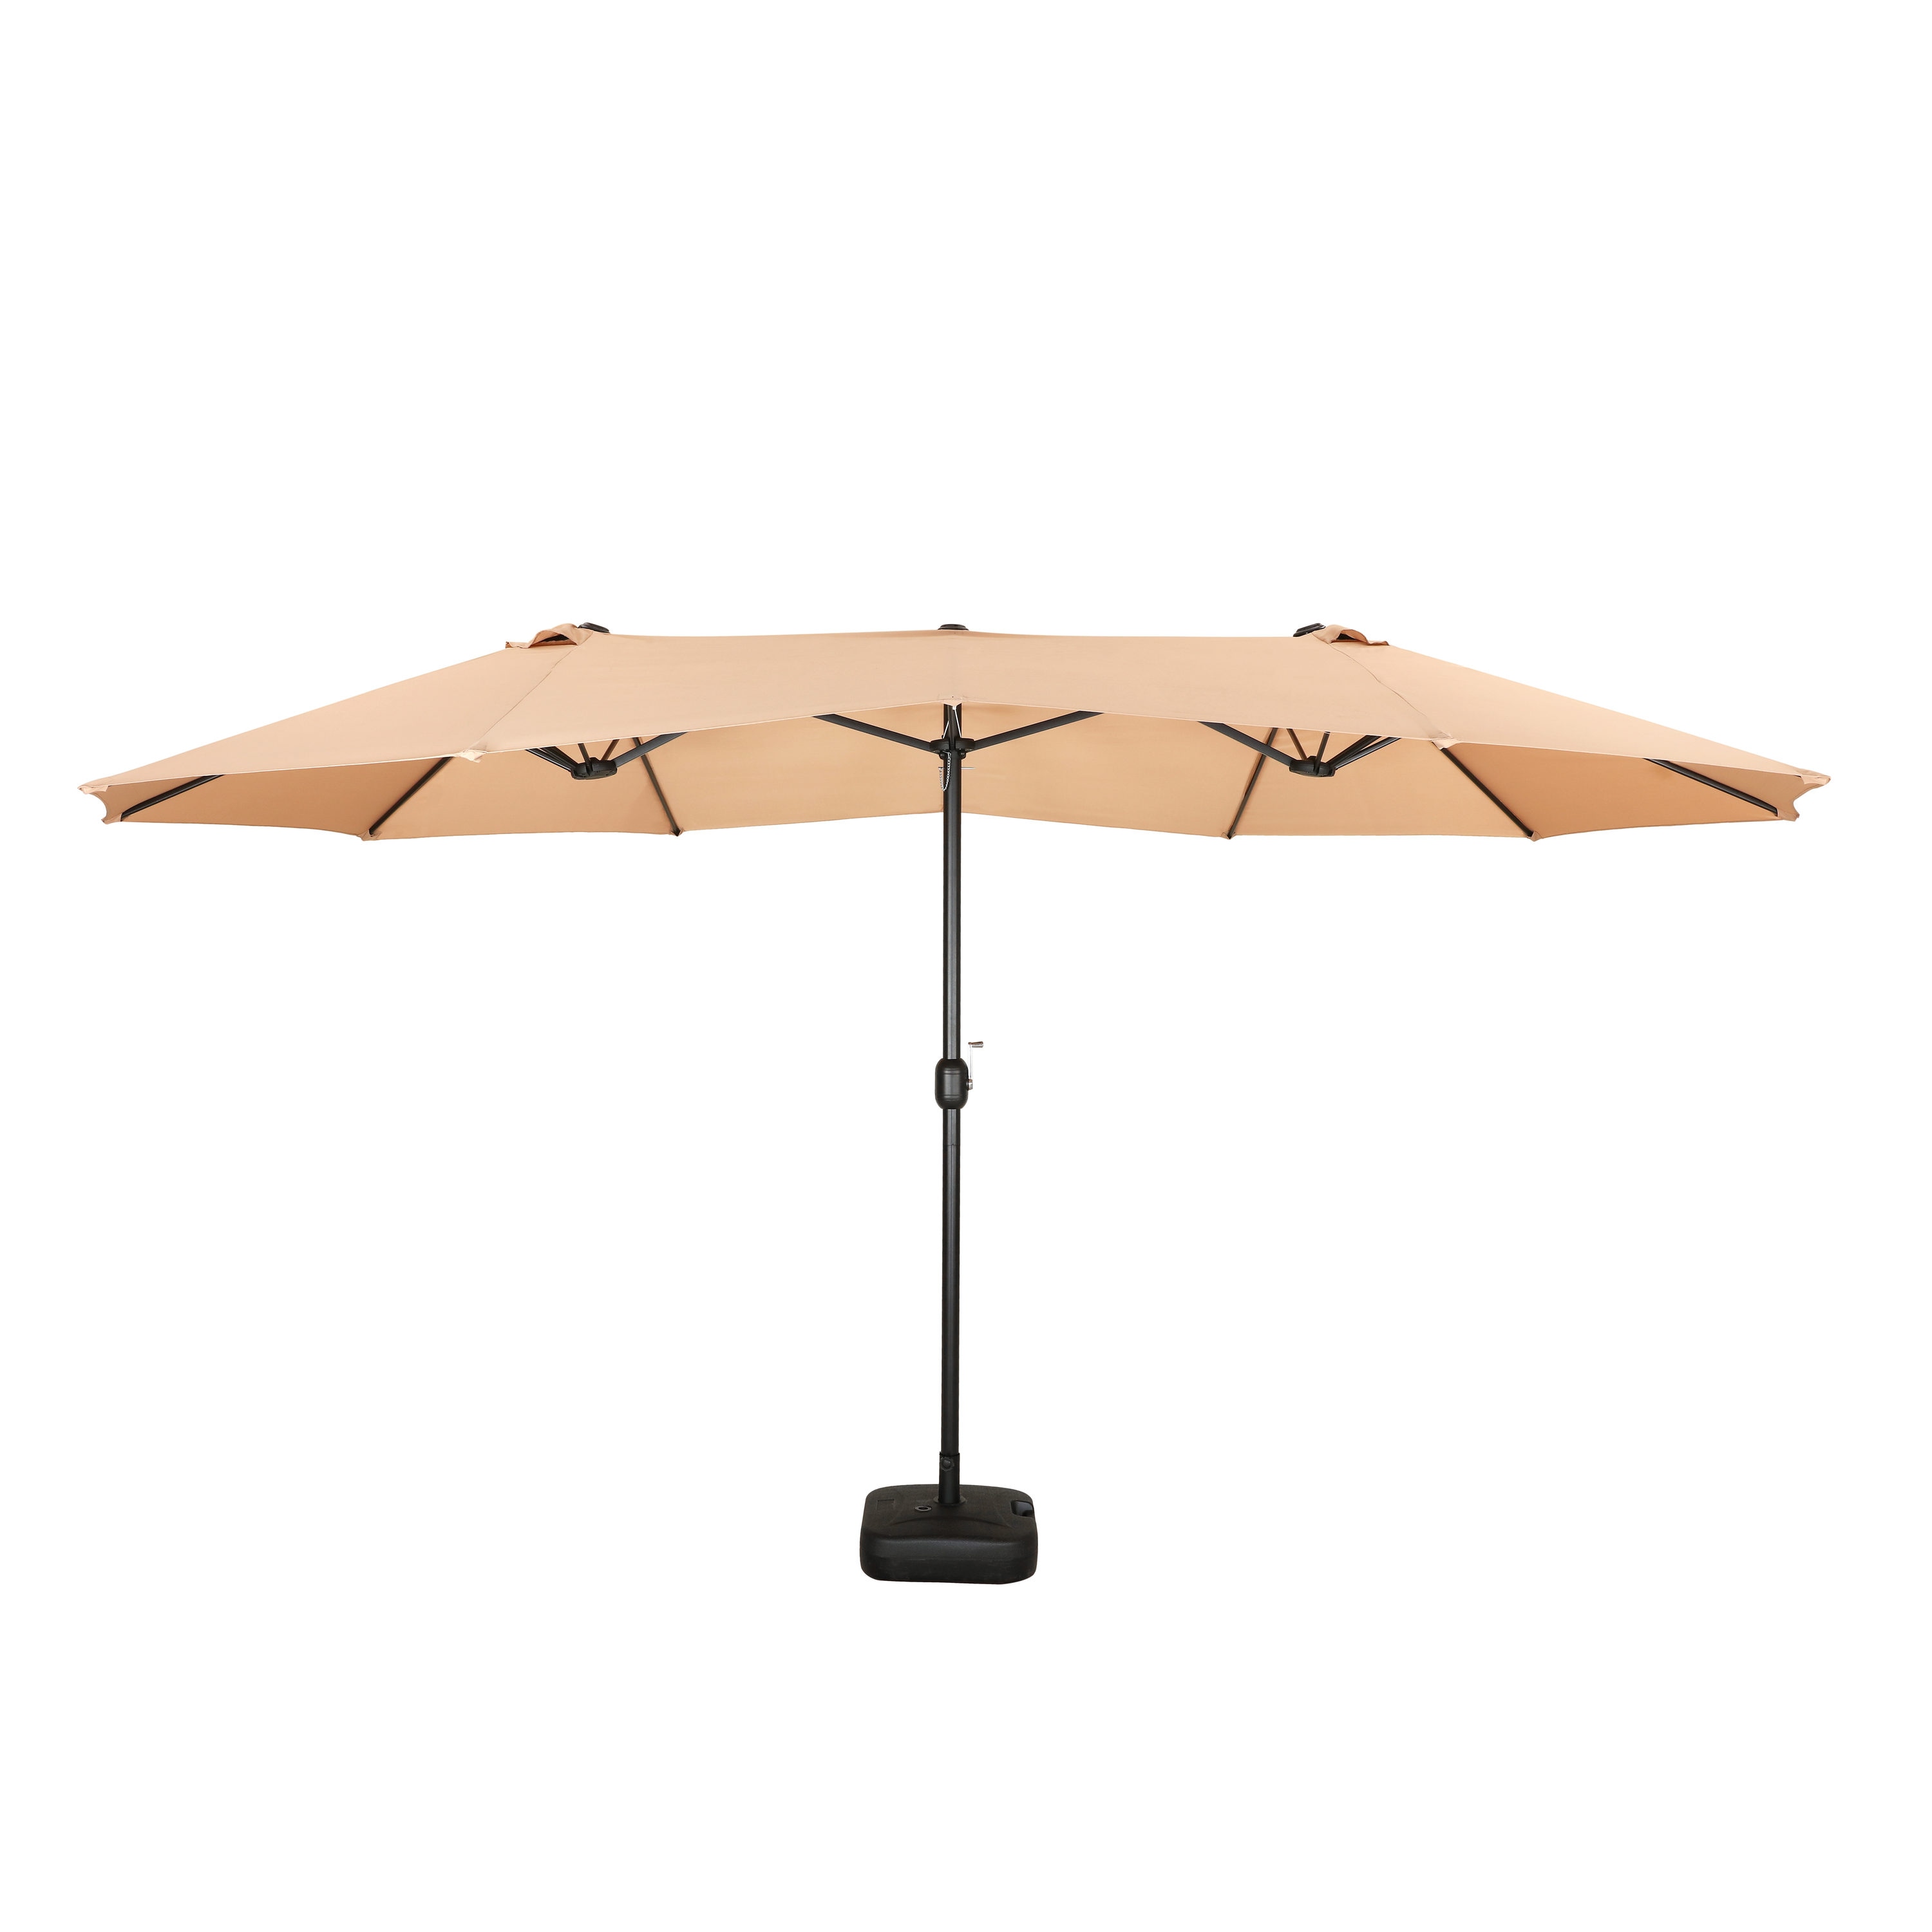 Khaki NEW Details about   9.5' Outdoor Market Patio Umbrella with Tilt and Crank 